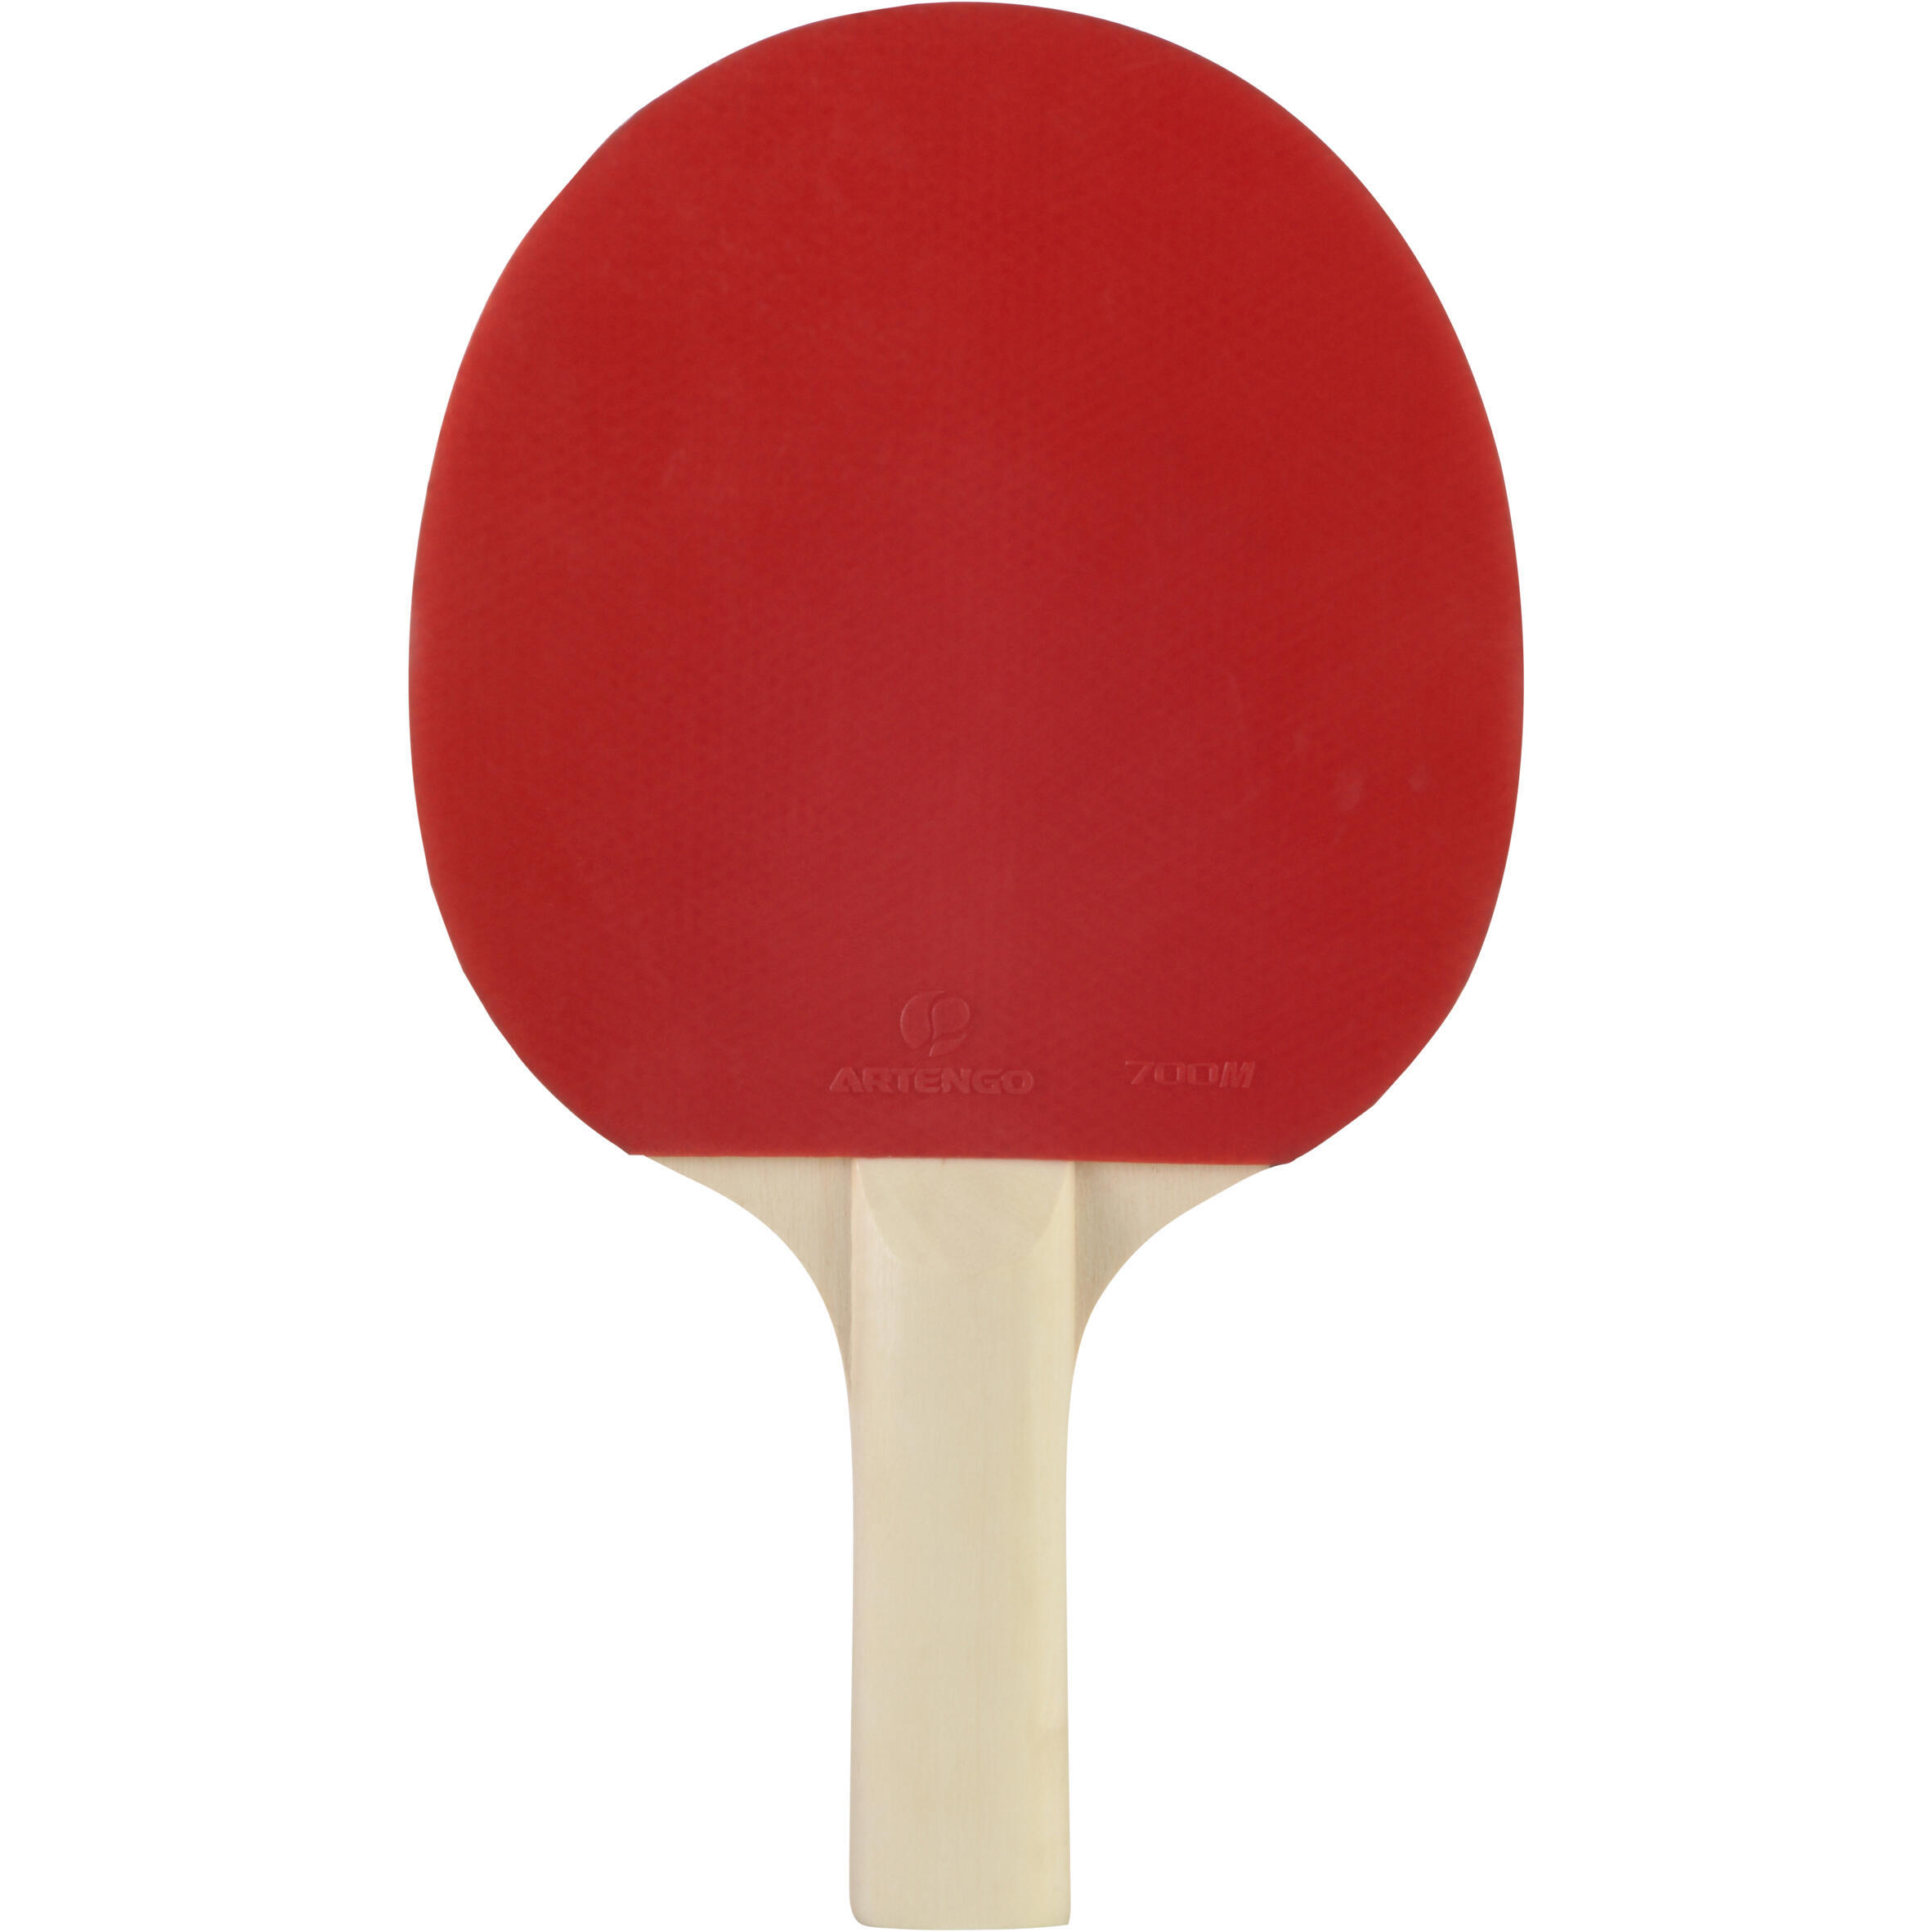 PONGORI Table Tennis Bat PPR 100